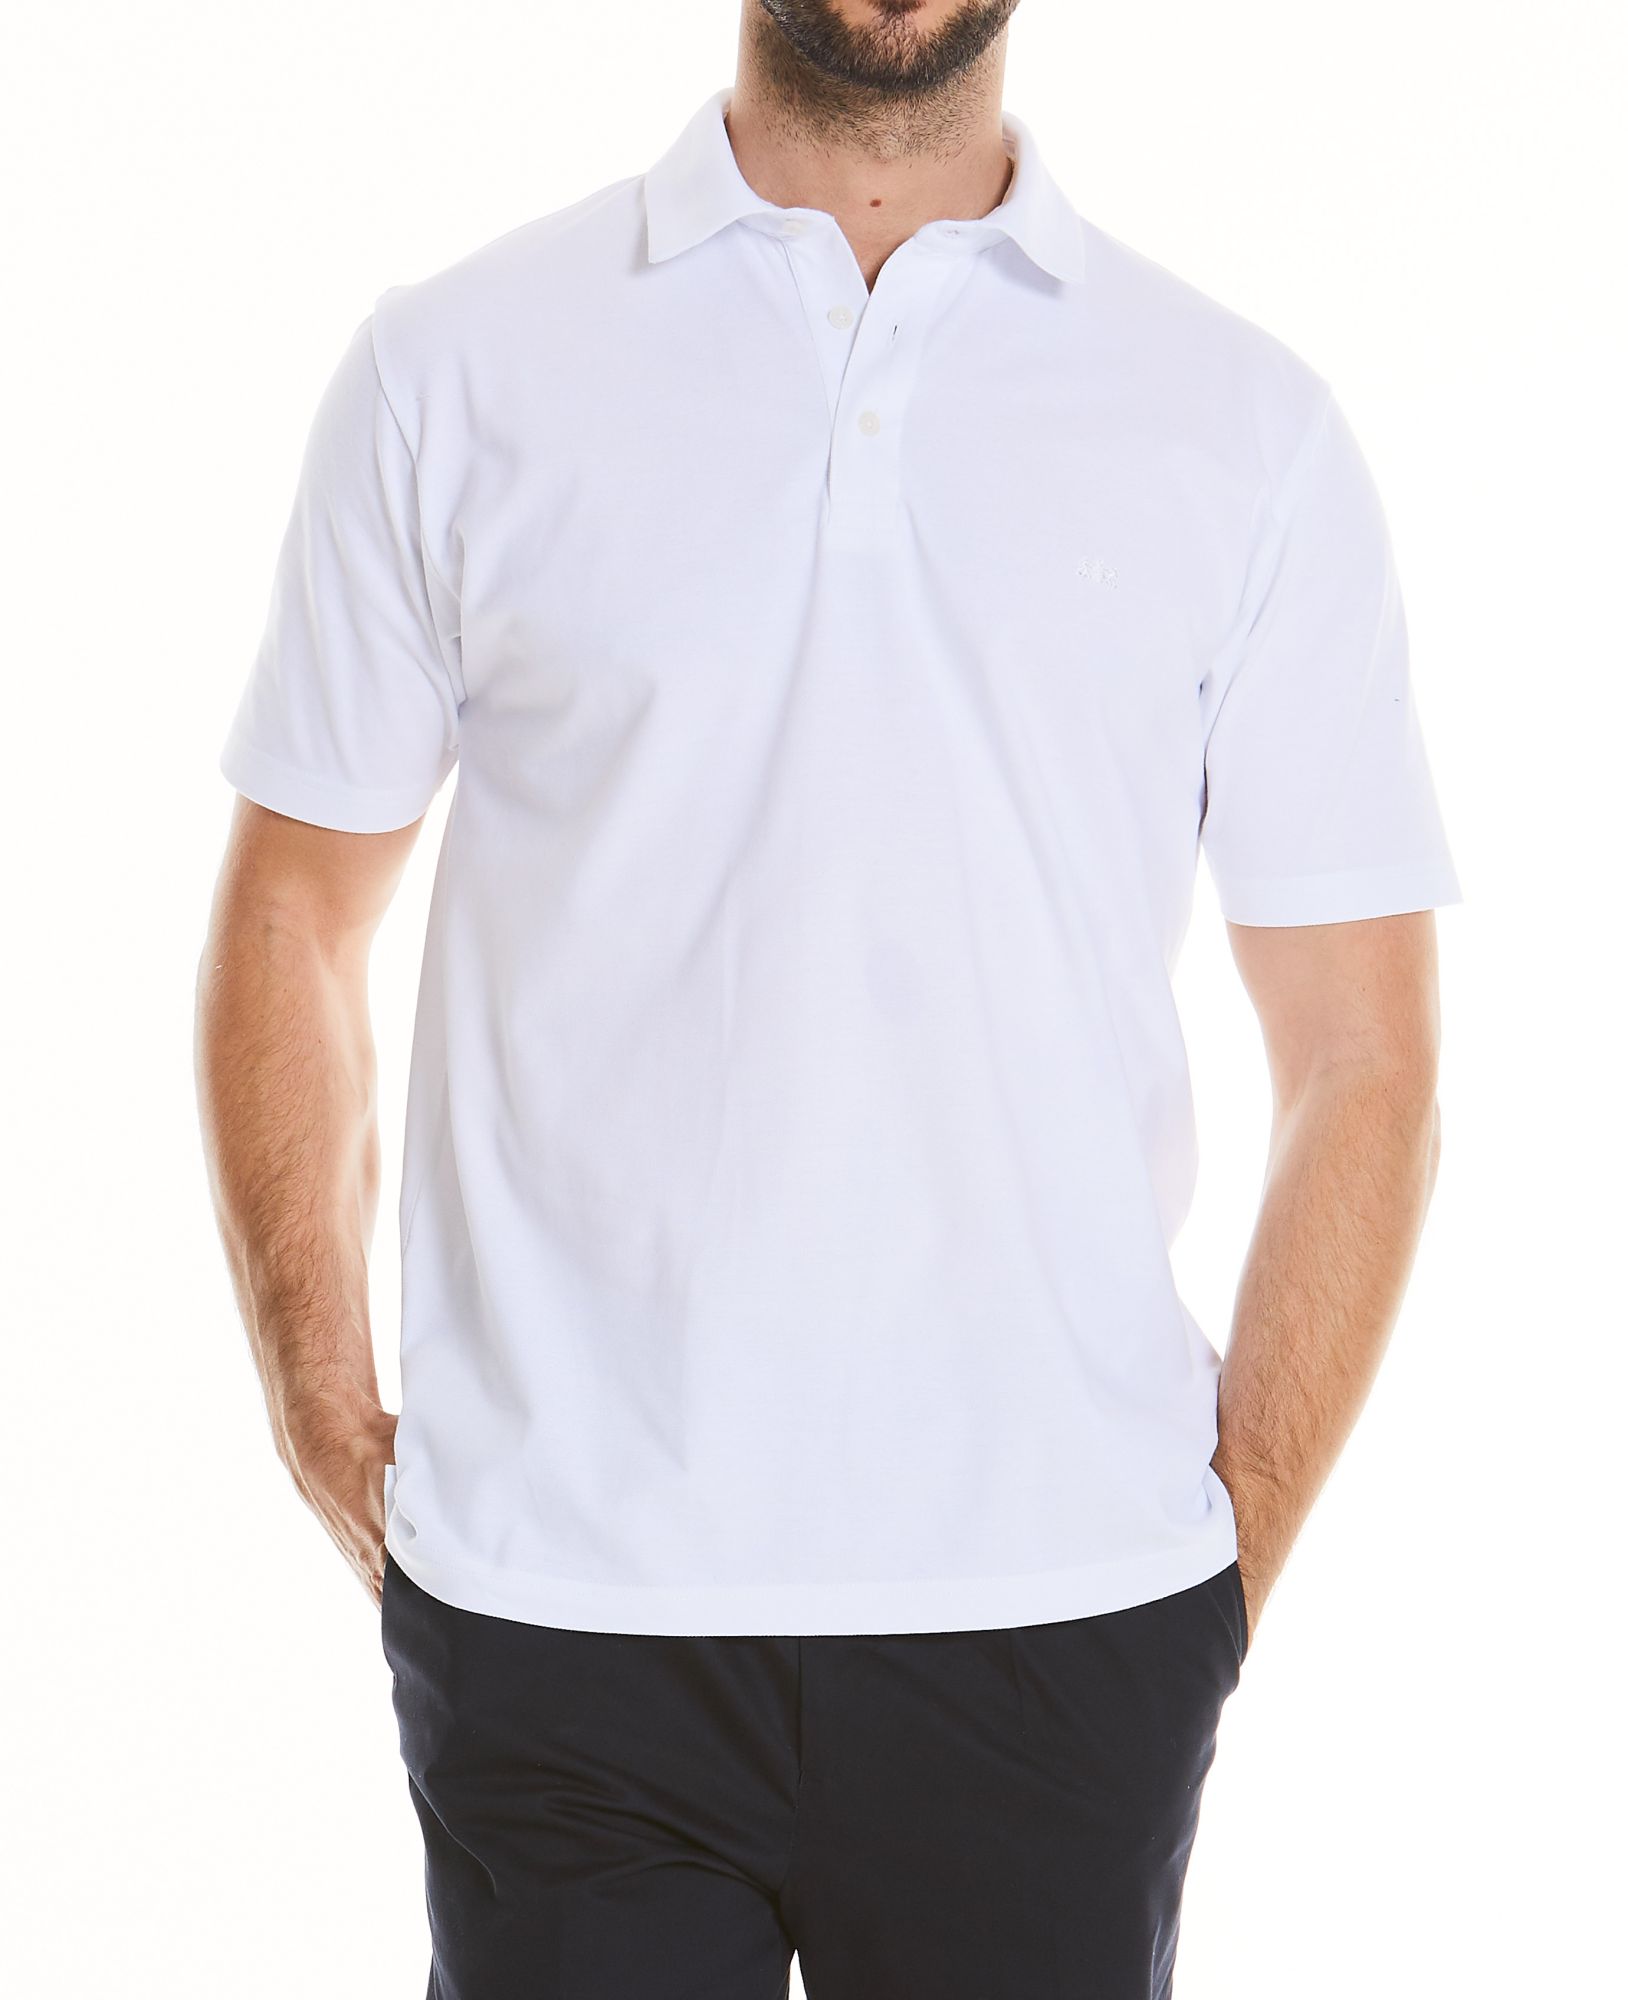 White Short Sleeve Polo Shirt S